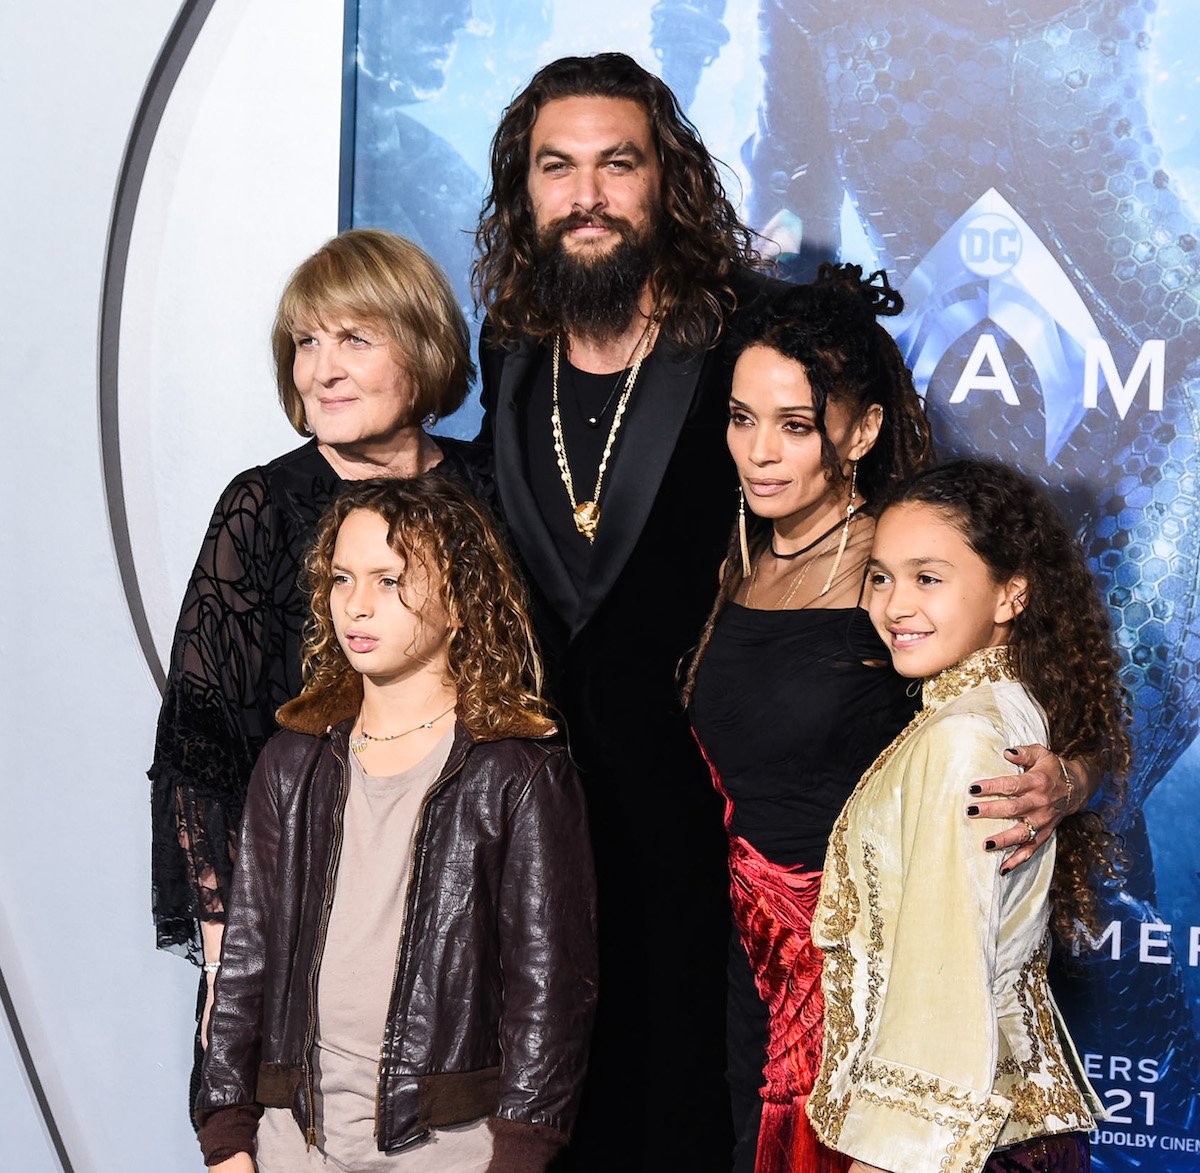 Jason Momoa and his family